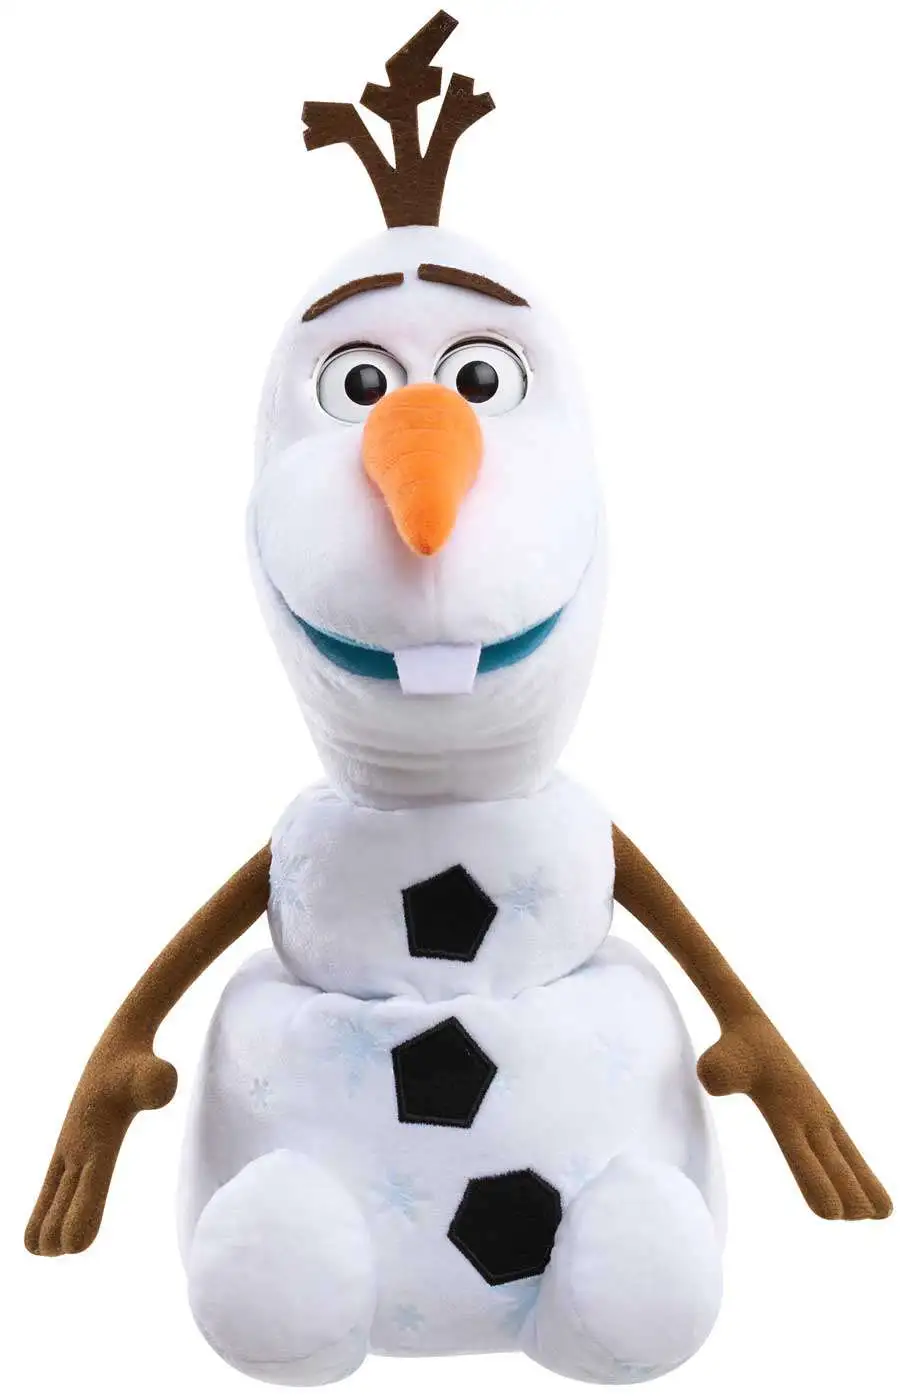 Evalueerbaar Petulance Triviaal Disney Frozen 2 Spring Surprise Olaf Plush Figure Just Play - ToyWiz